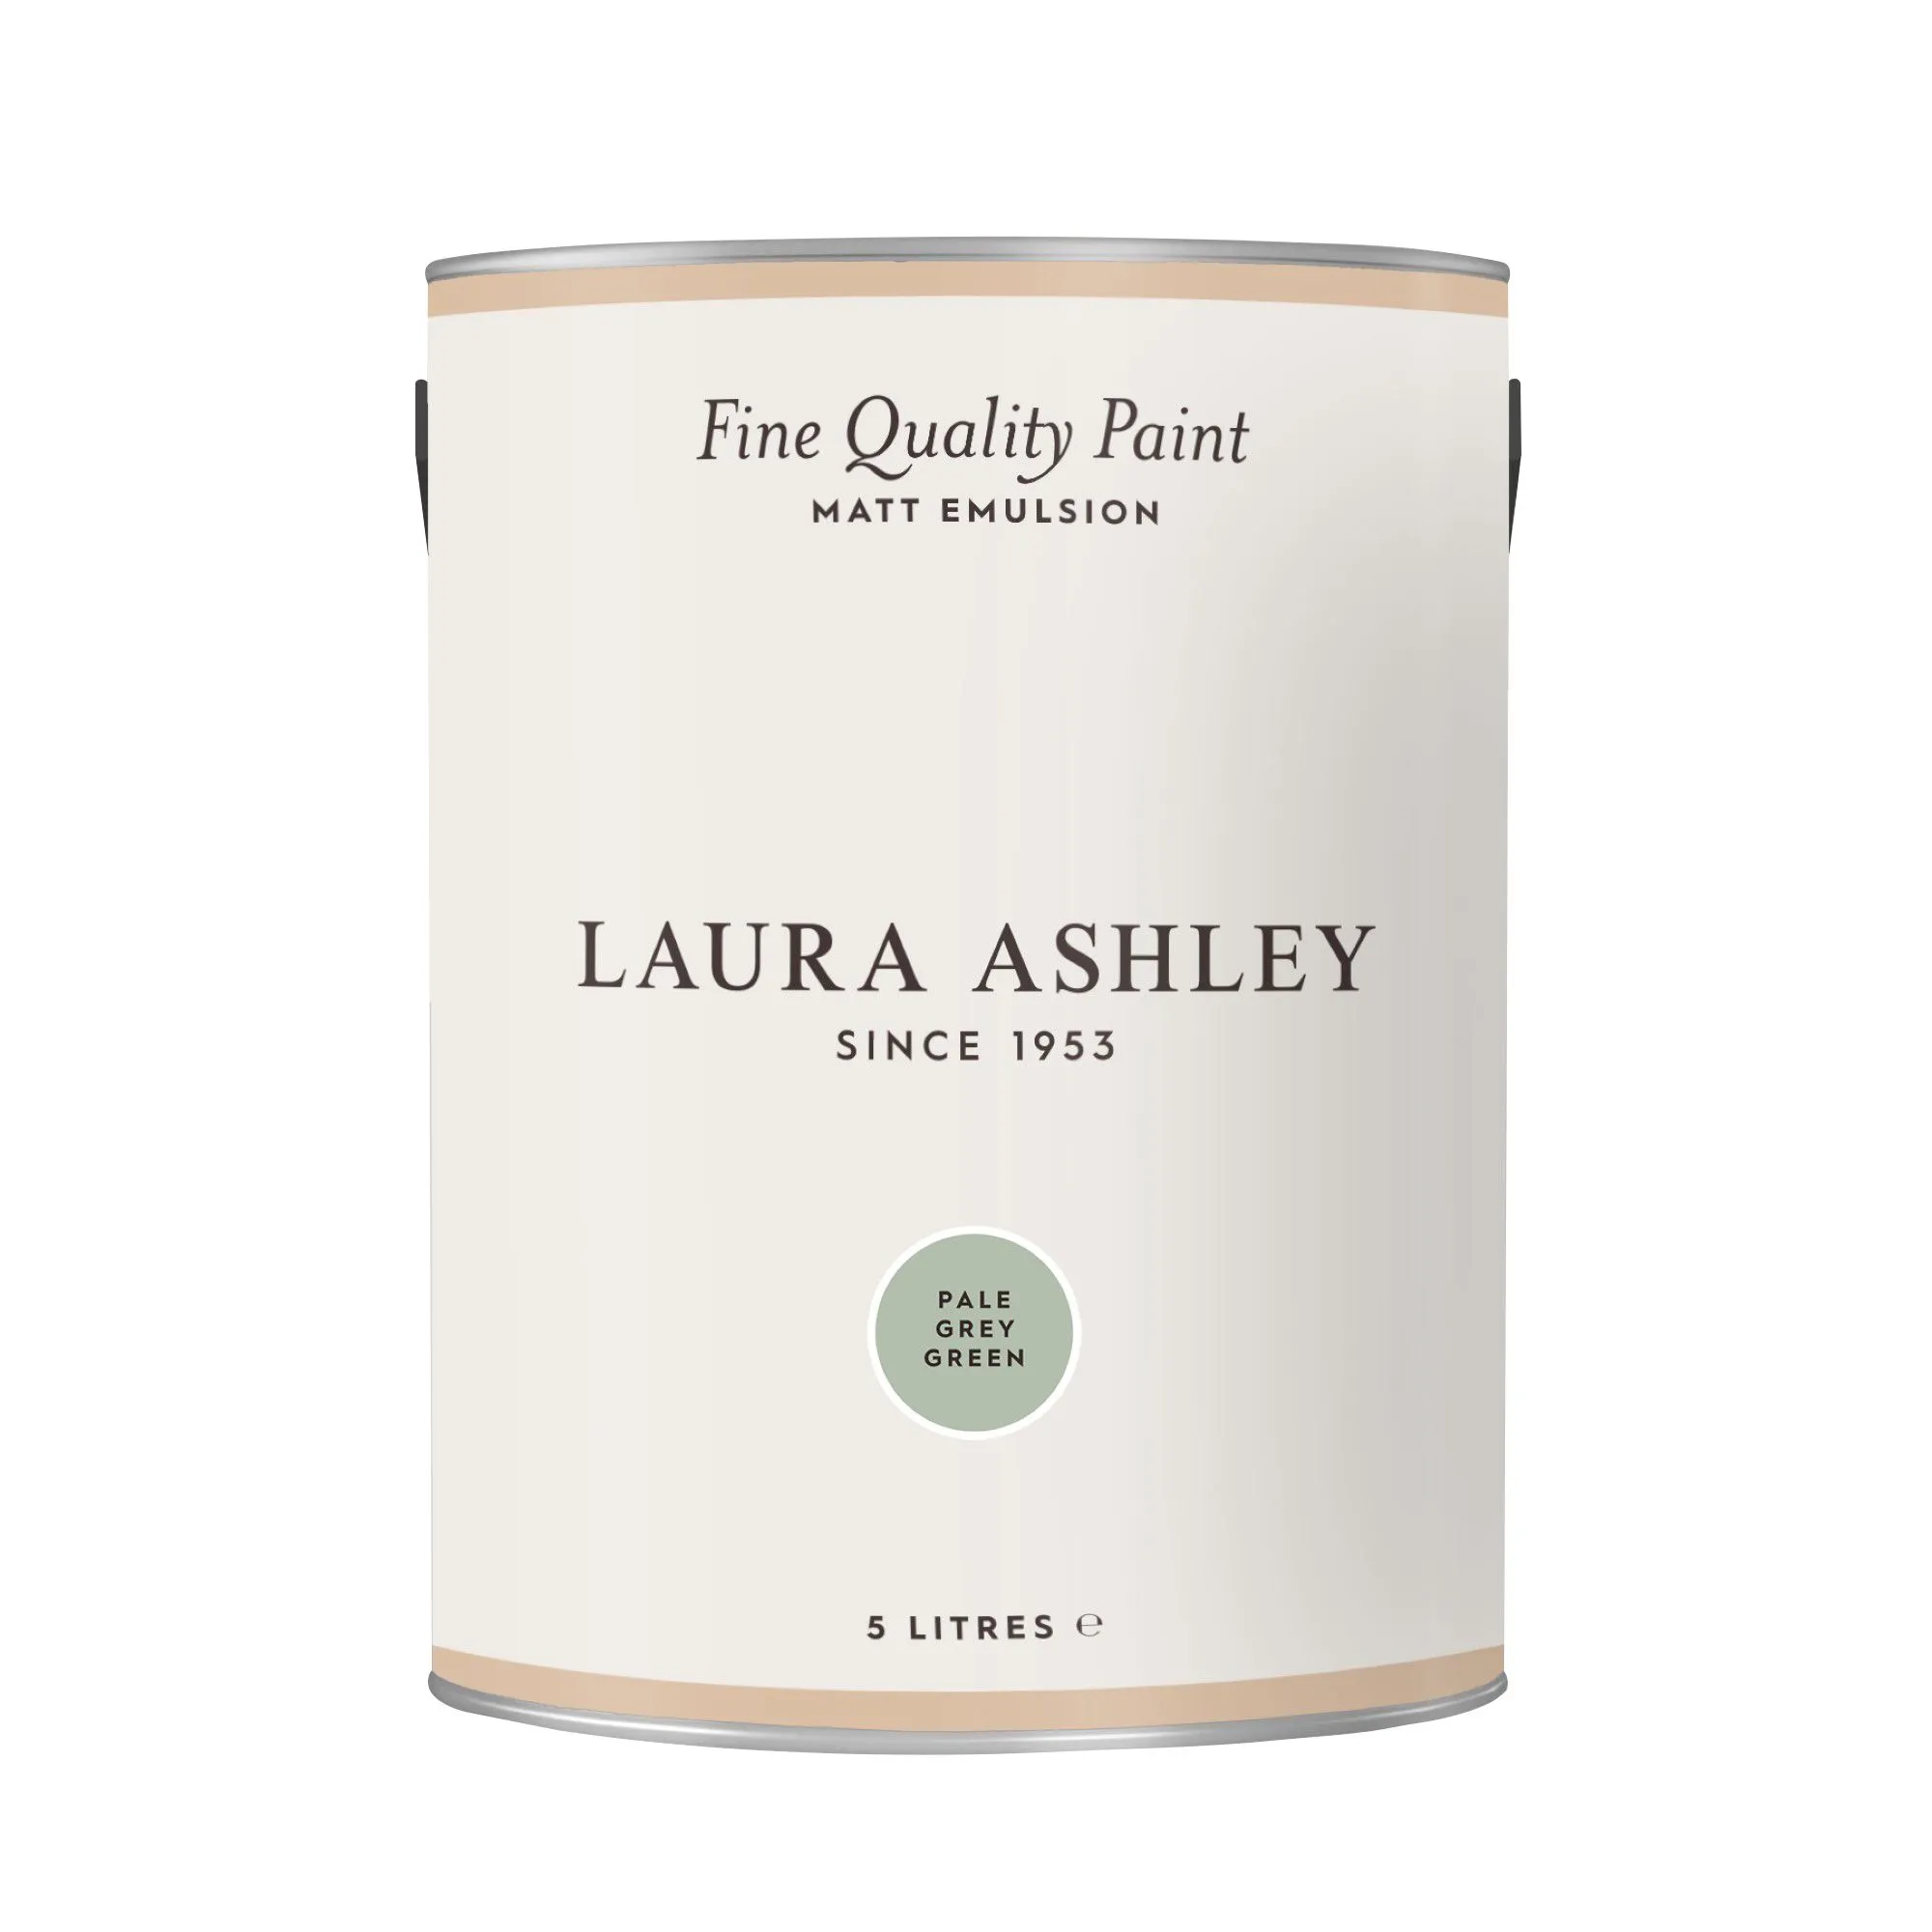 Laura Ashley Pale Grey Green Matt Emulsion paint, 5L